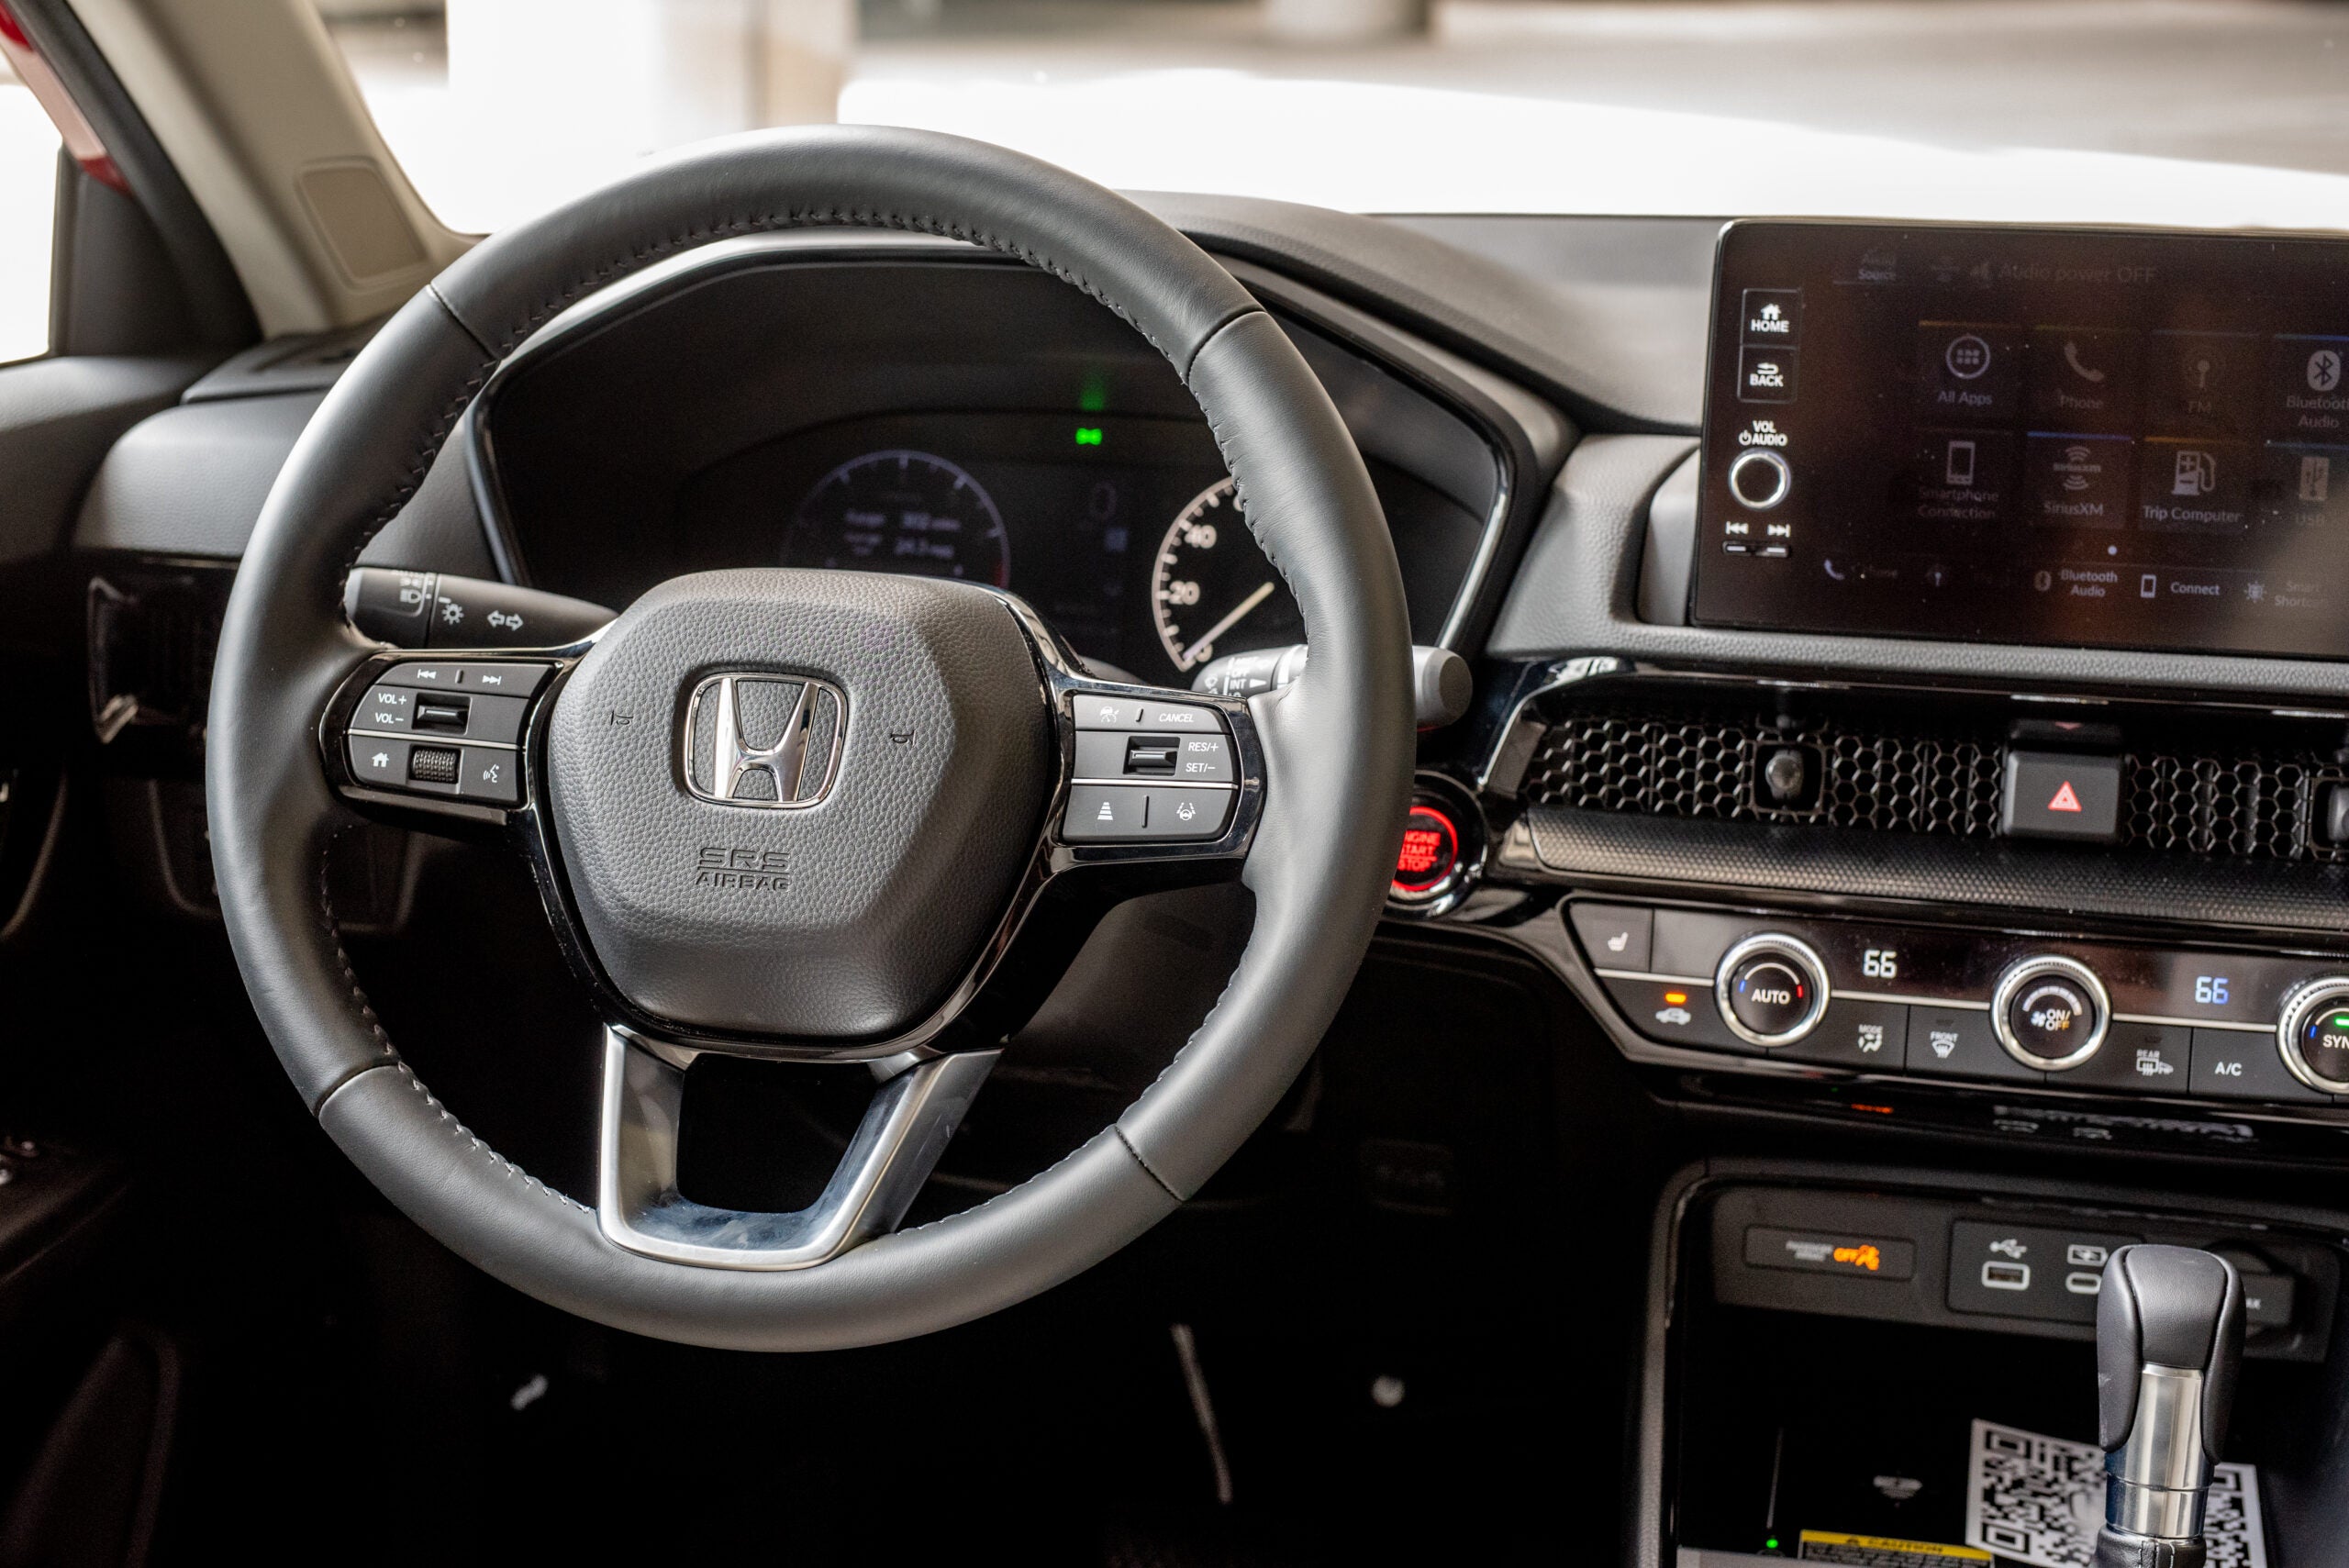 Honda CR-V photo